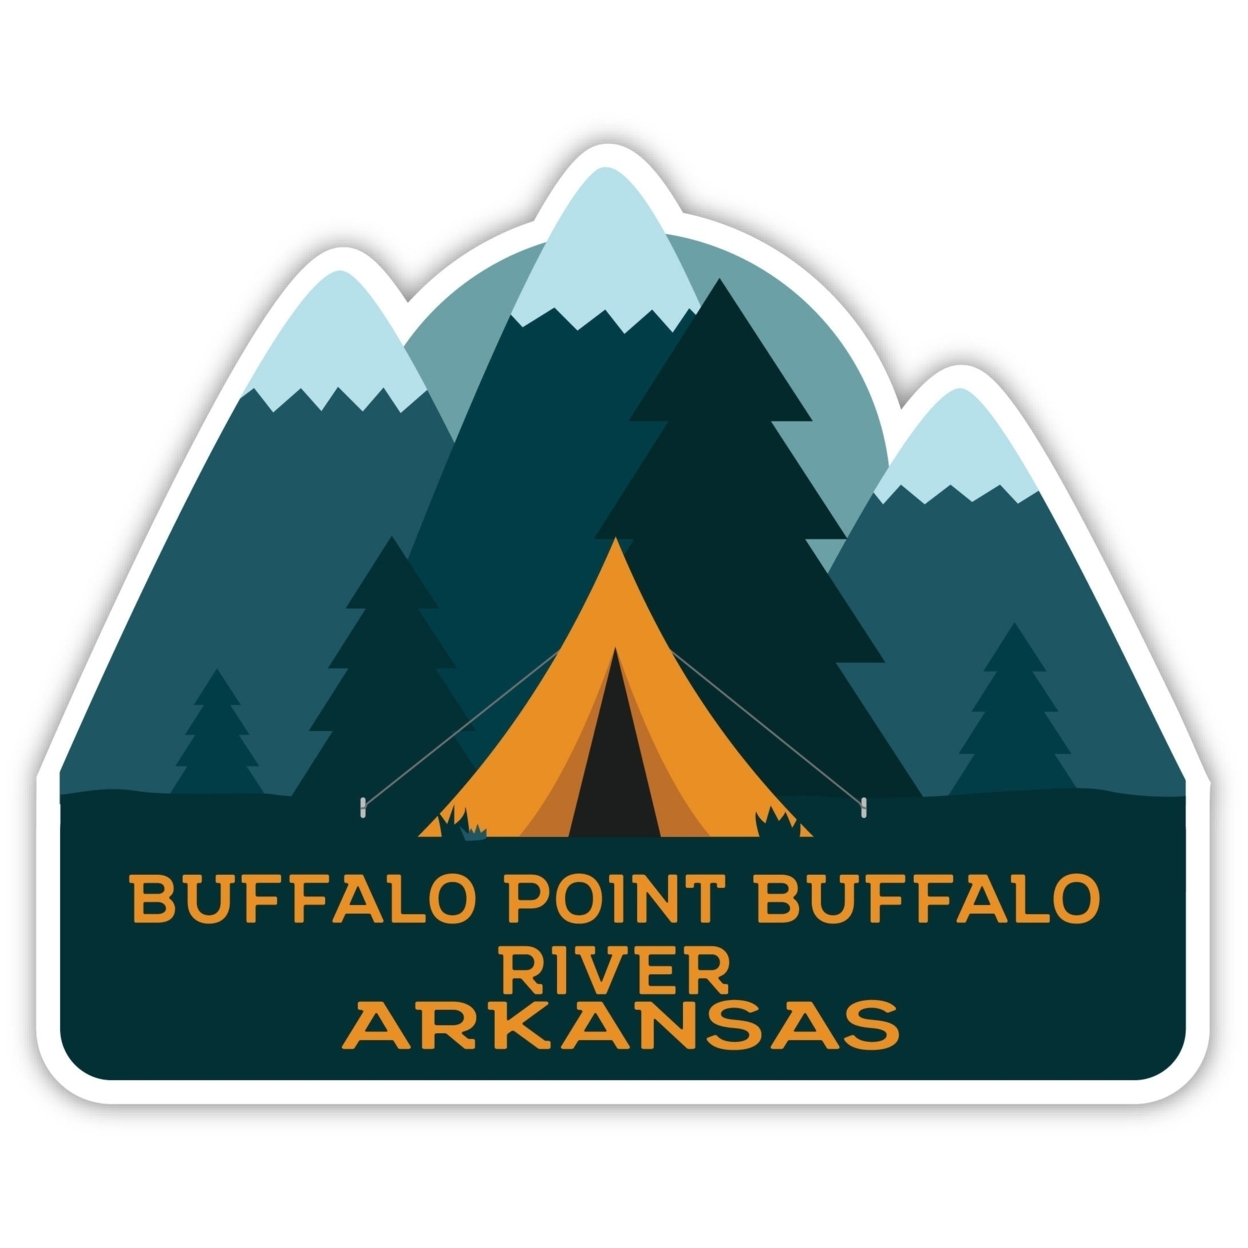 Buffalo Point Buffalo River Arkansas Souvenir Decorative Stickers (Choose Theme And Size) - 4-Pack, 4-Inch, Tent